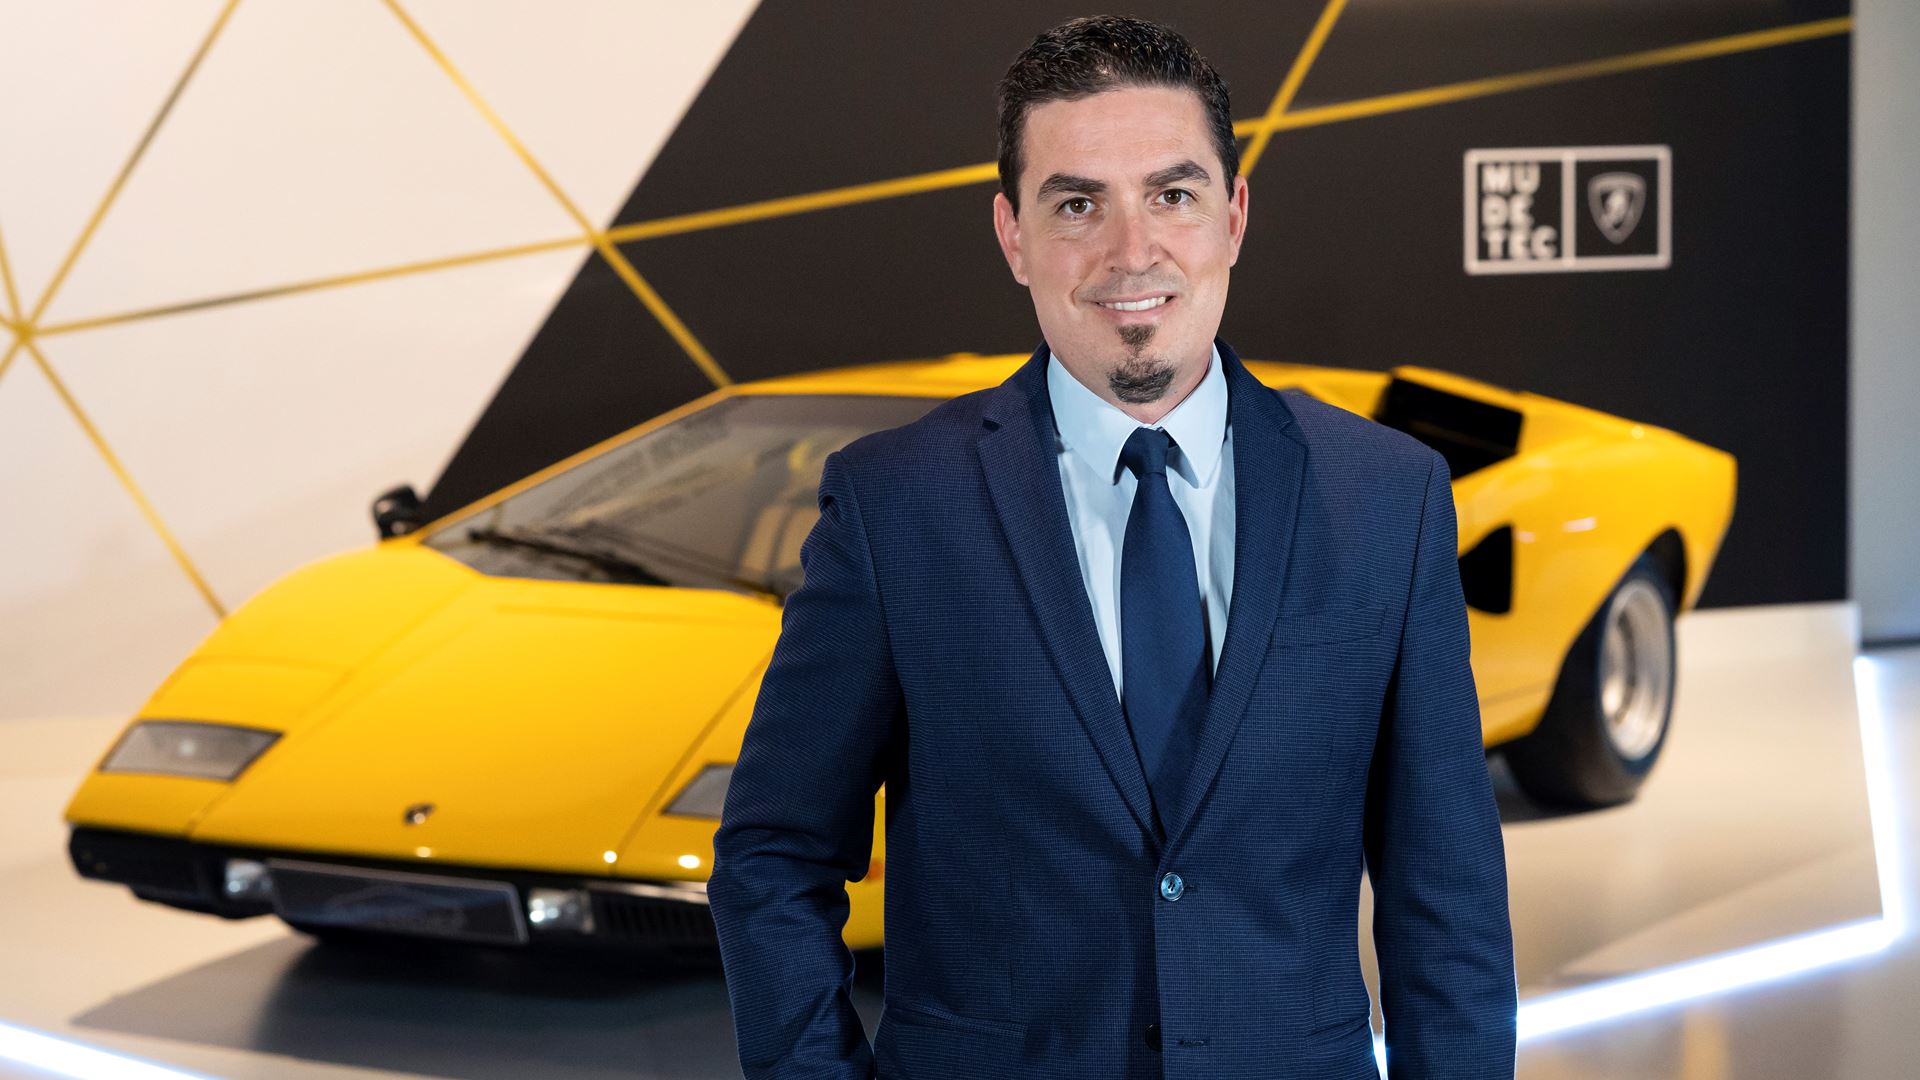 Automobili Lamborghini announces two new appointments - Image 2